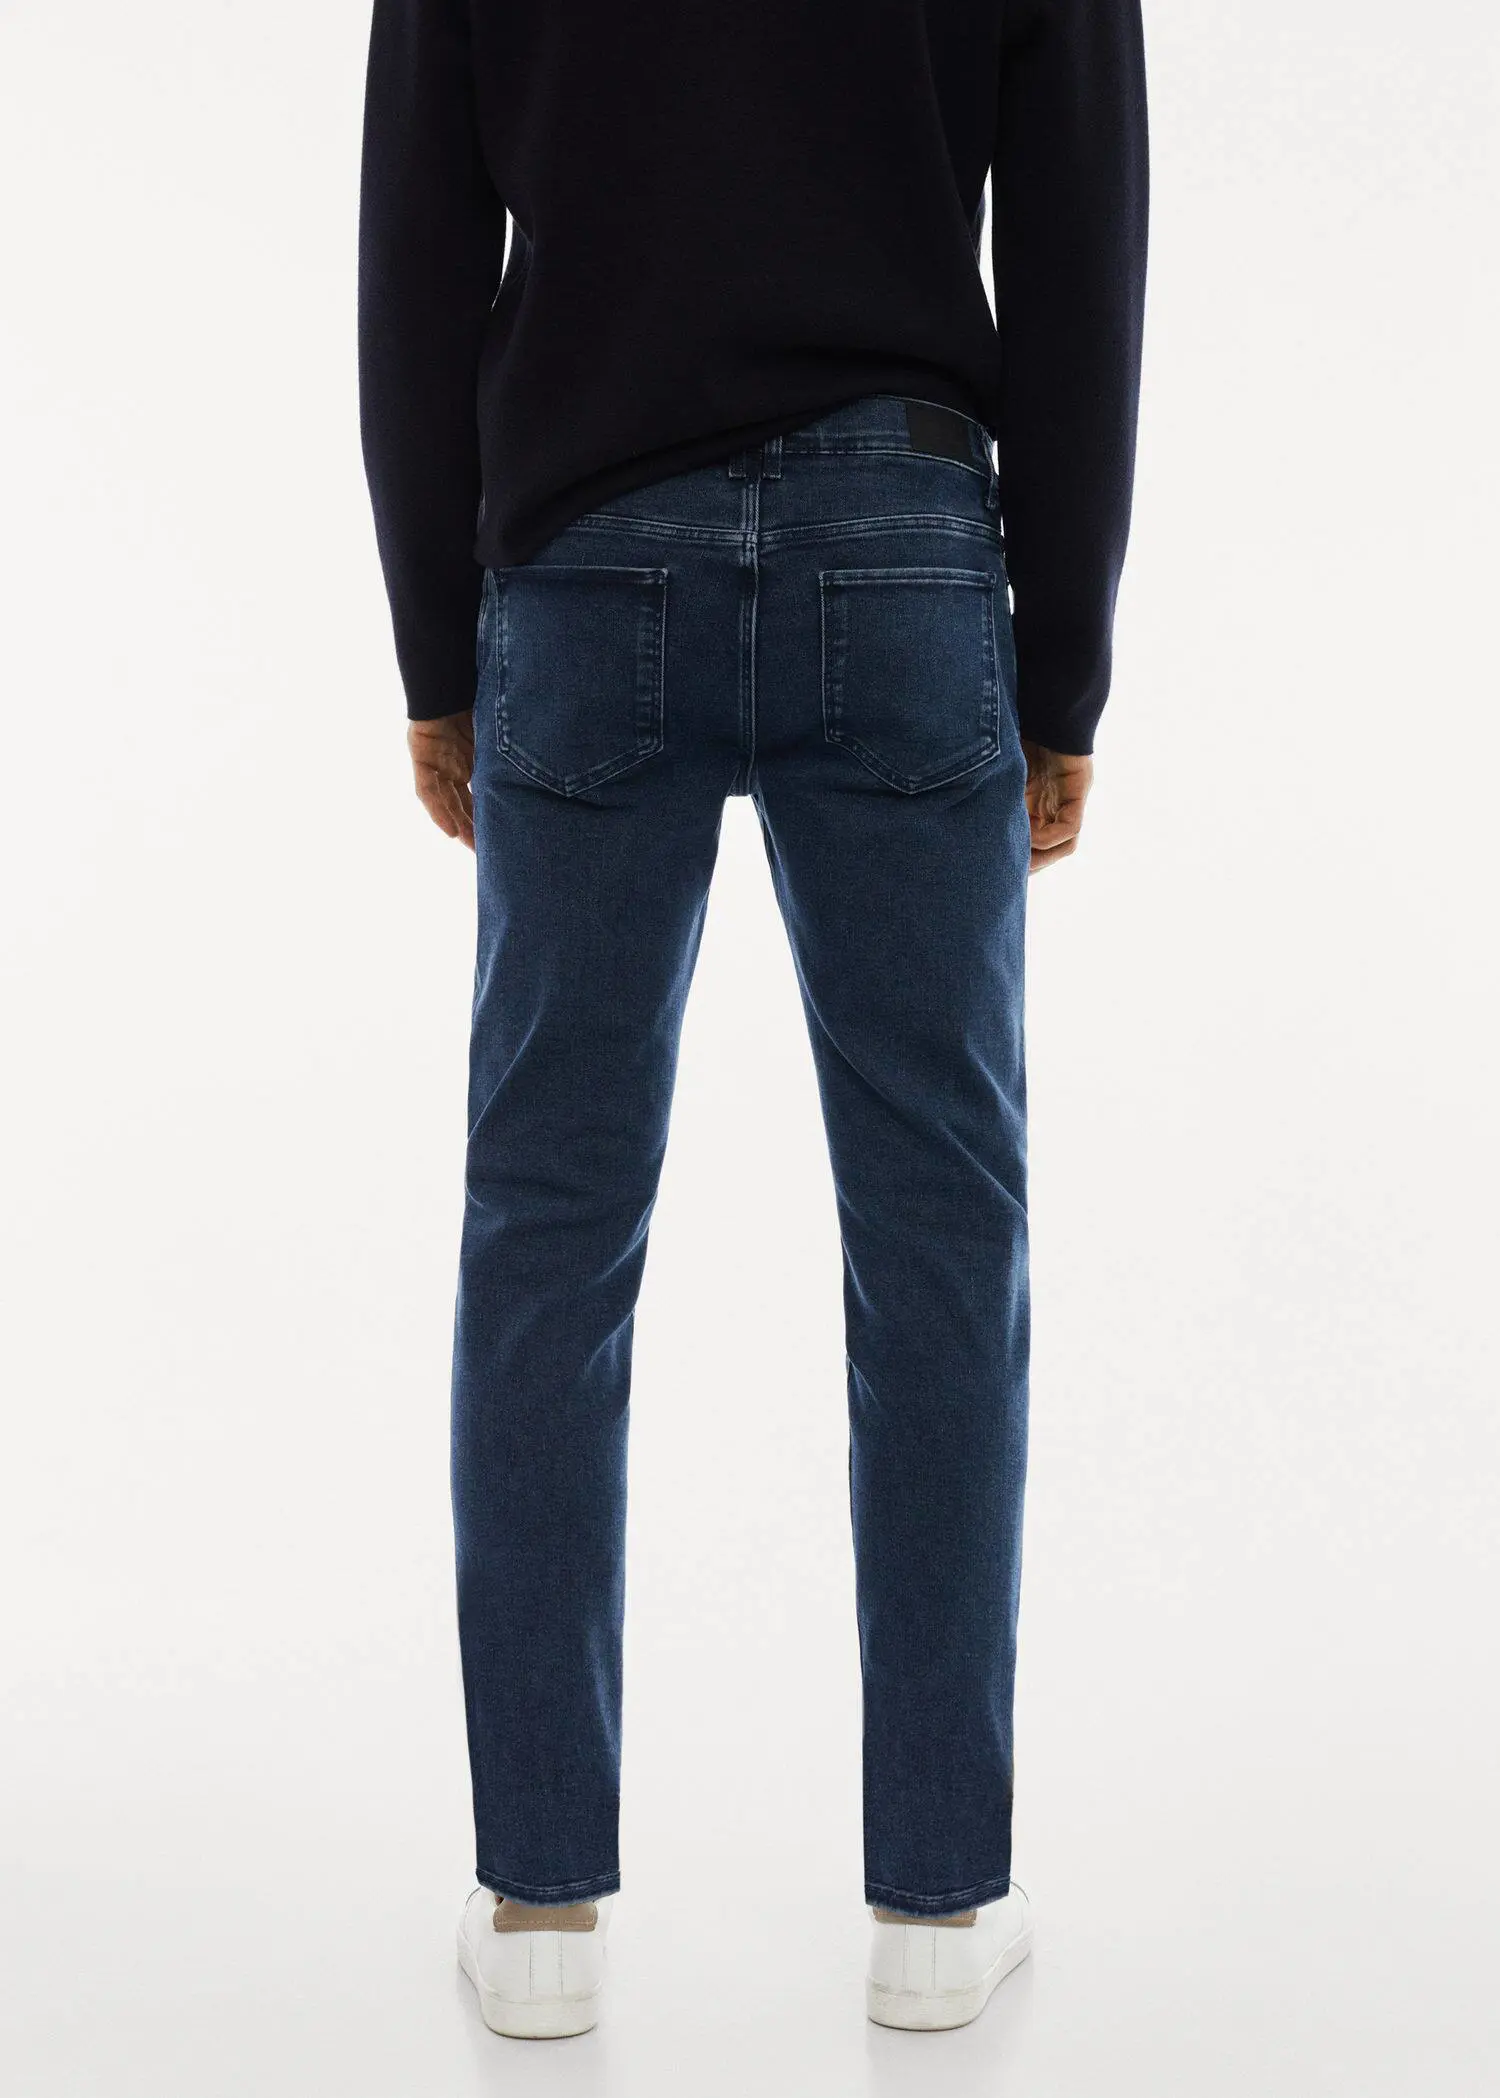 Mango THERMOLITE® slim-fit jeans. 3